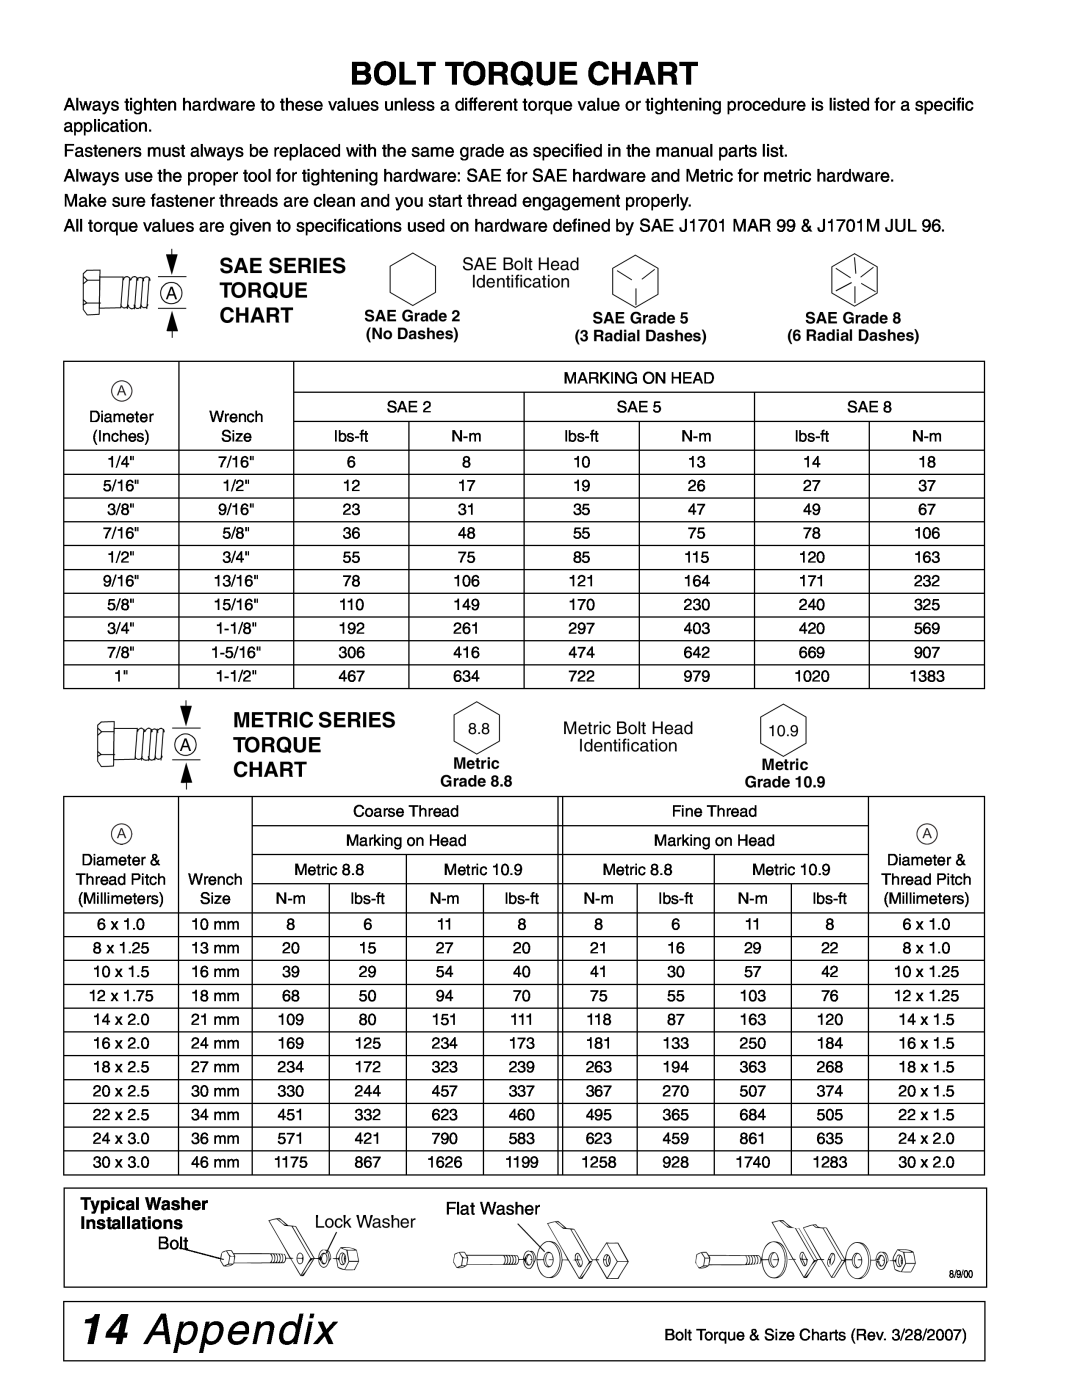 Woods Equipment MX54 14Appendix, Bolt Torque Chart, Sae Series A Torque Chart, Metric Series Atorque Chart, Identification 